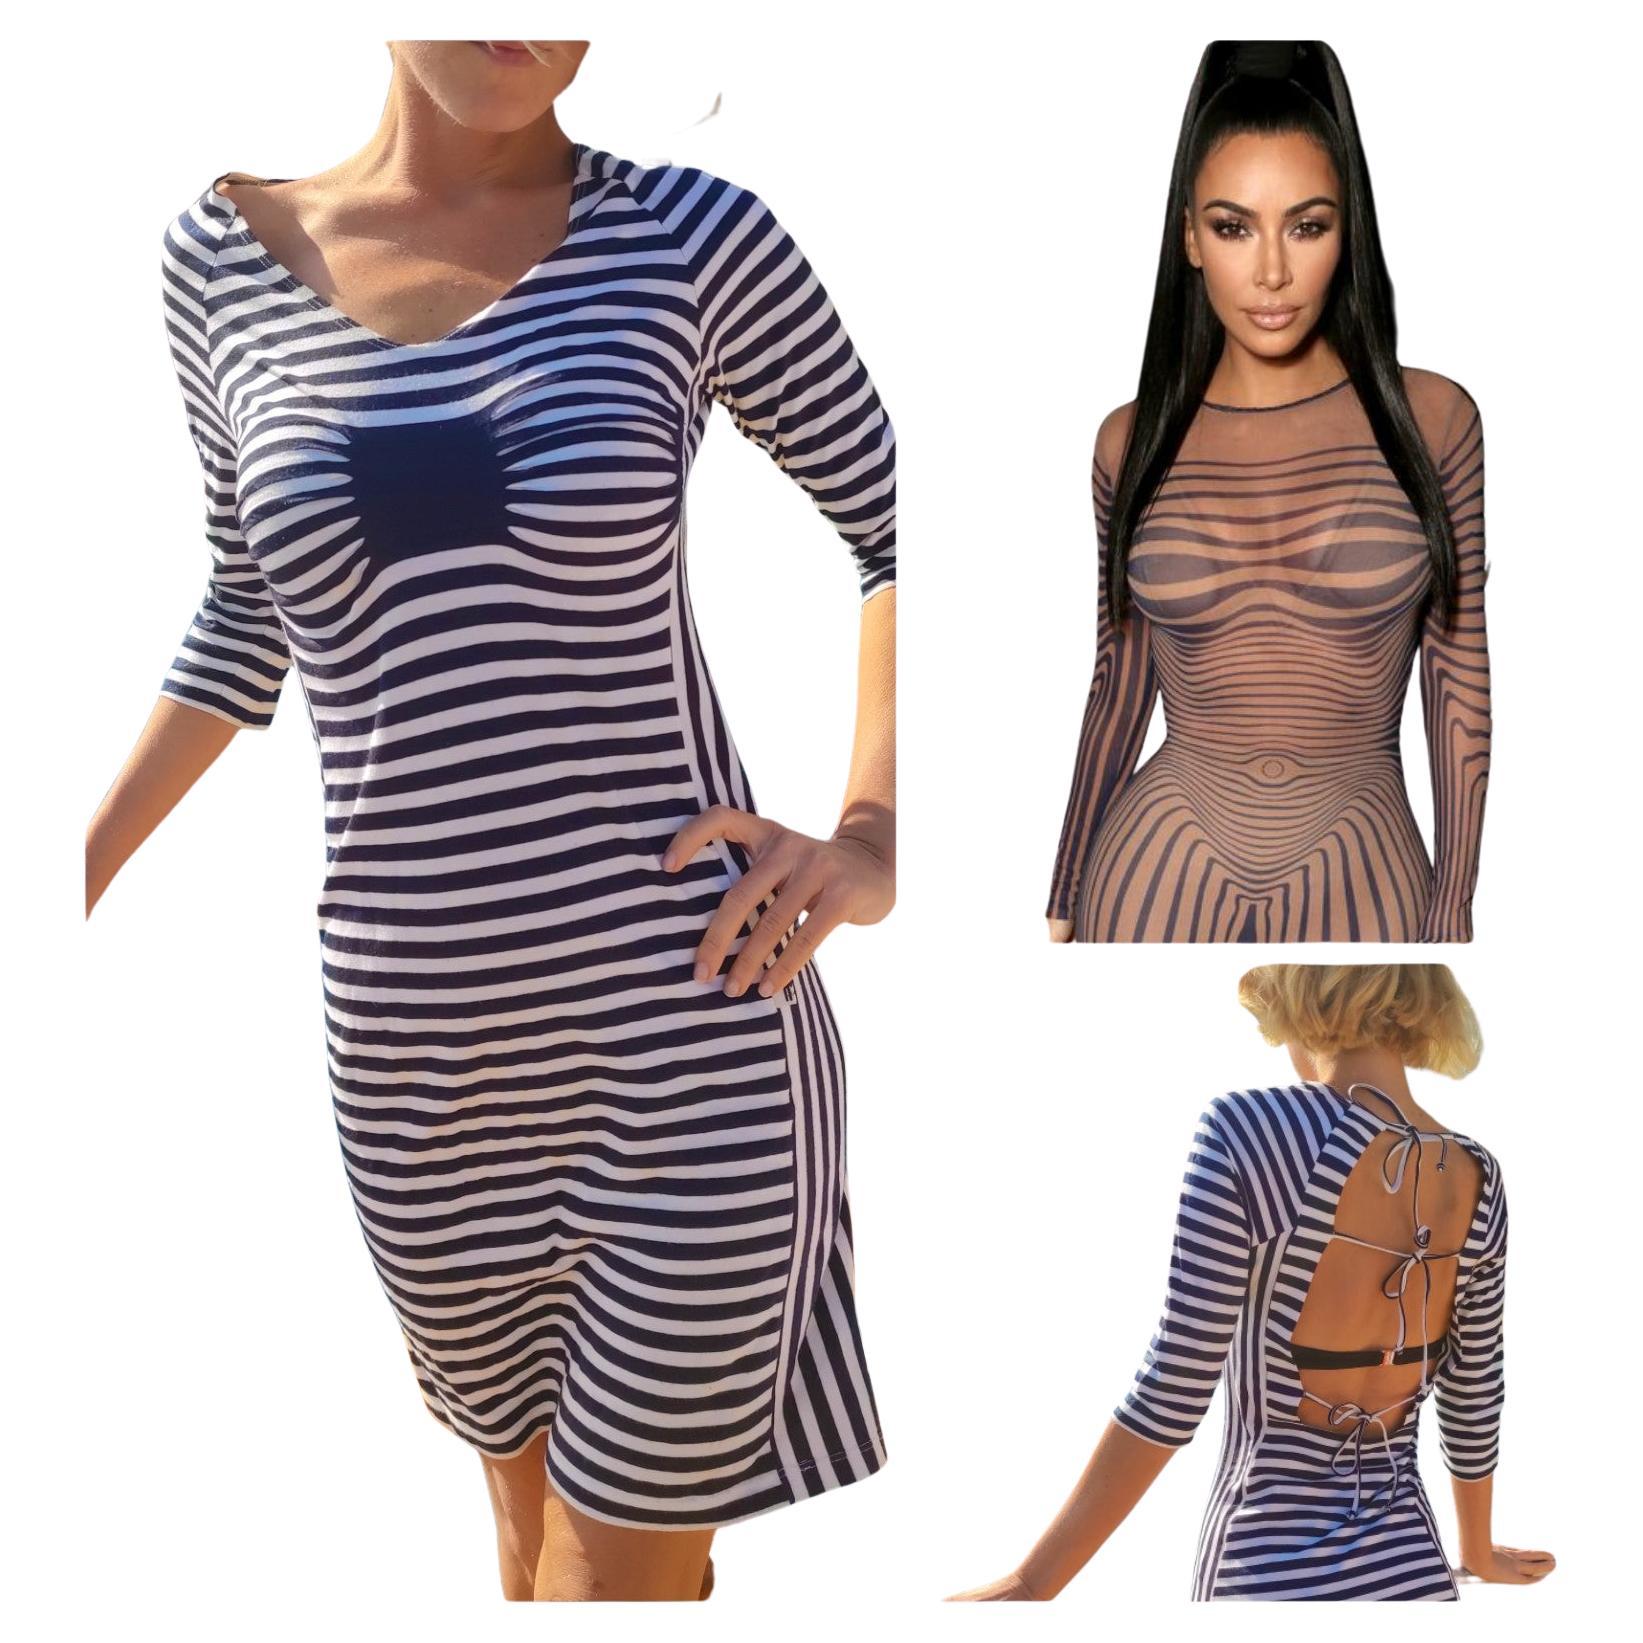 Jean Paul Gaultier Optical Illusion Striped Body Map Kim Kardashian Dress For Sale